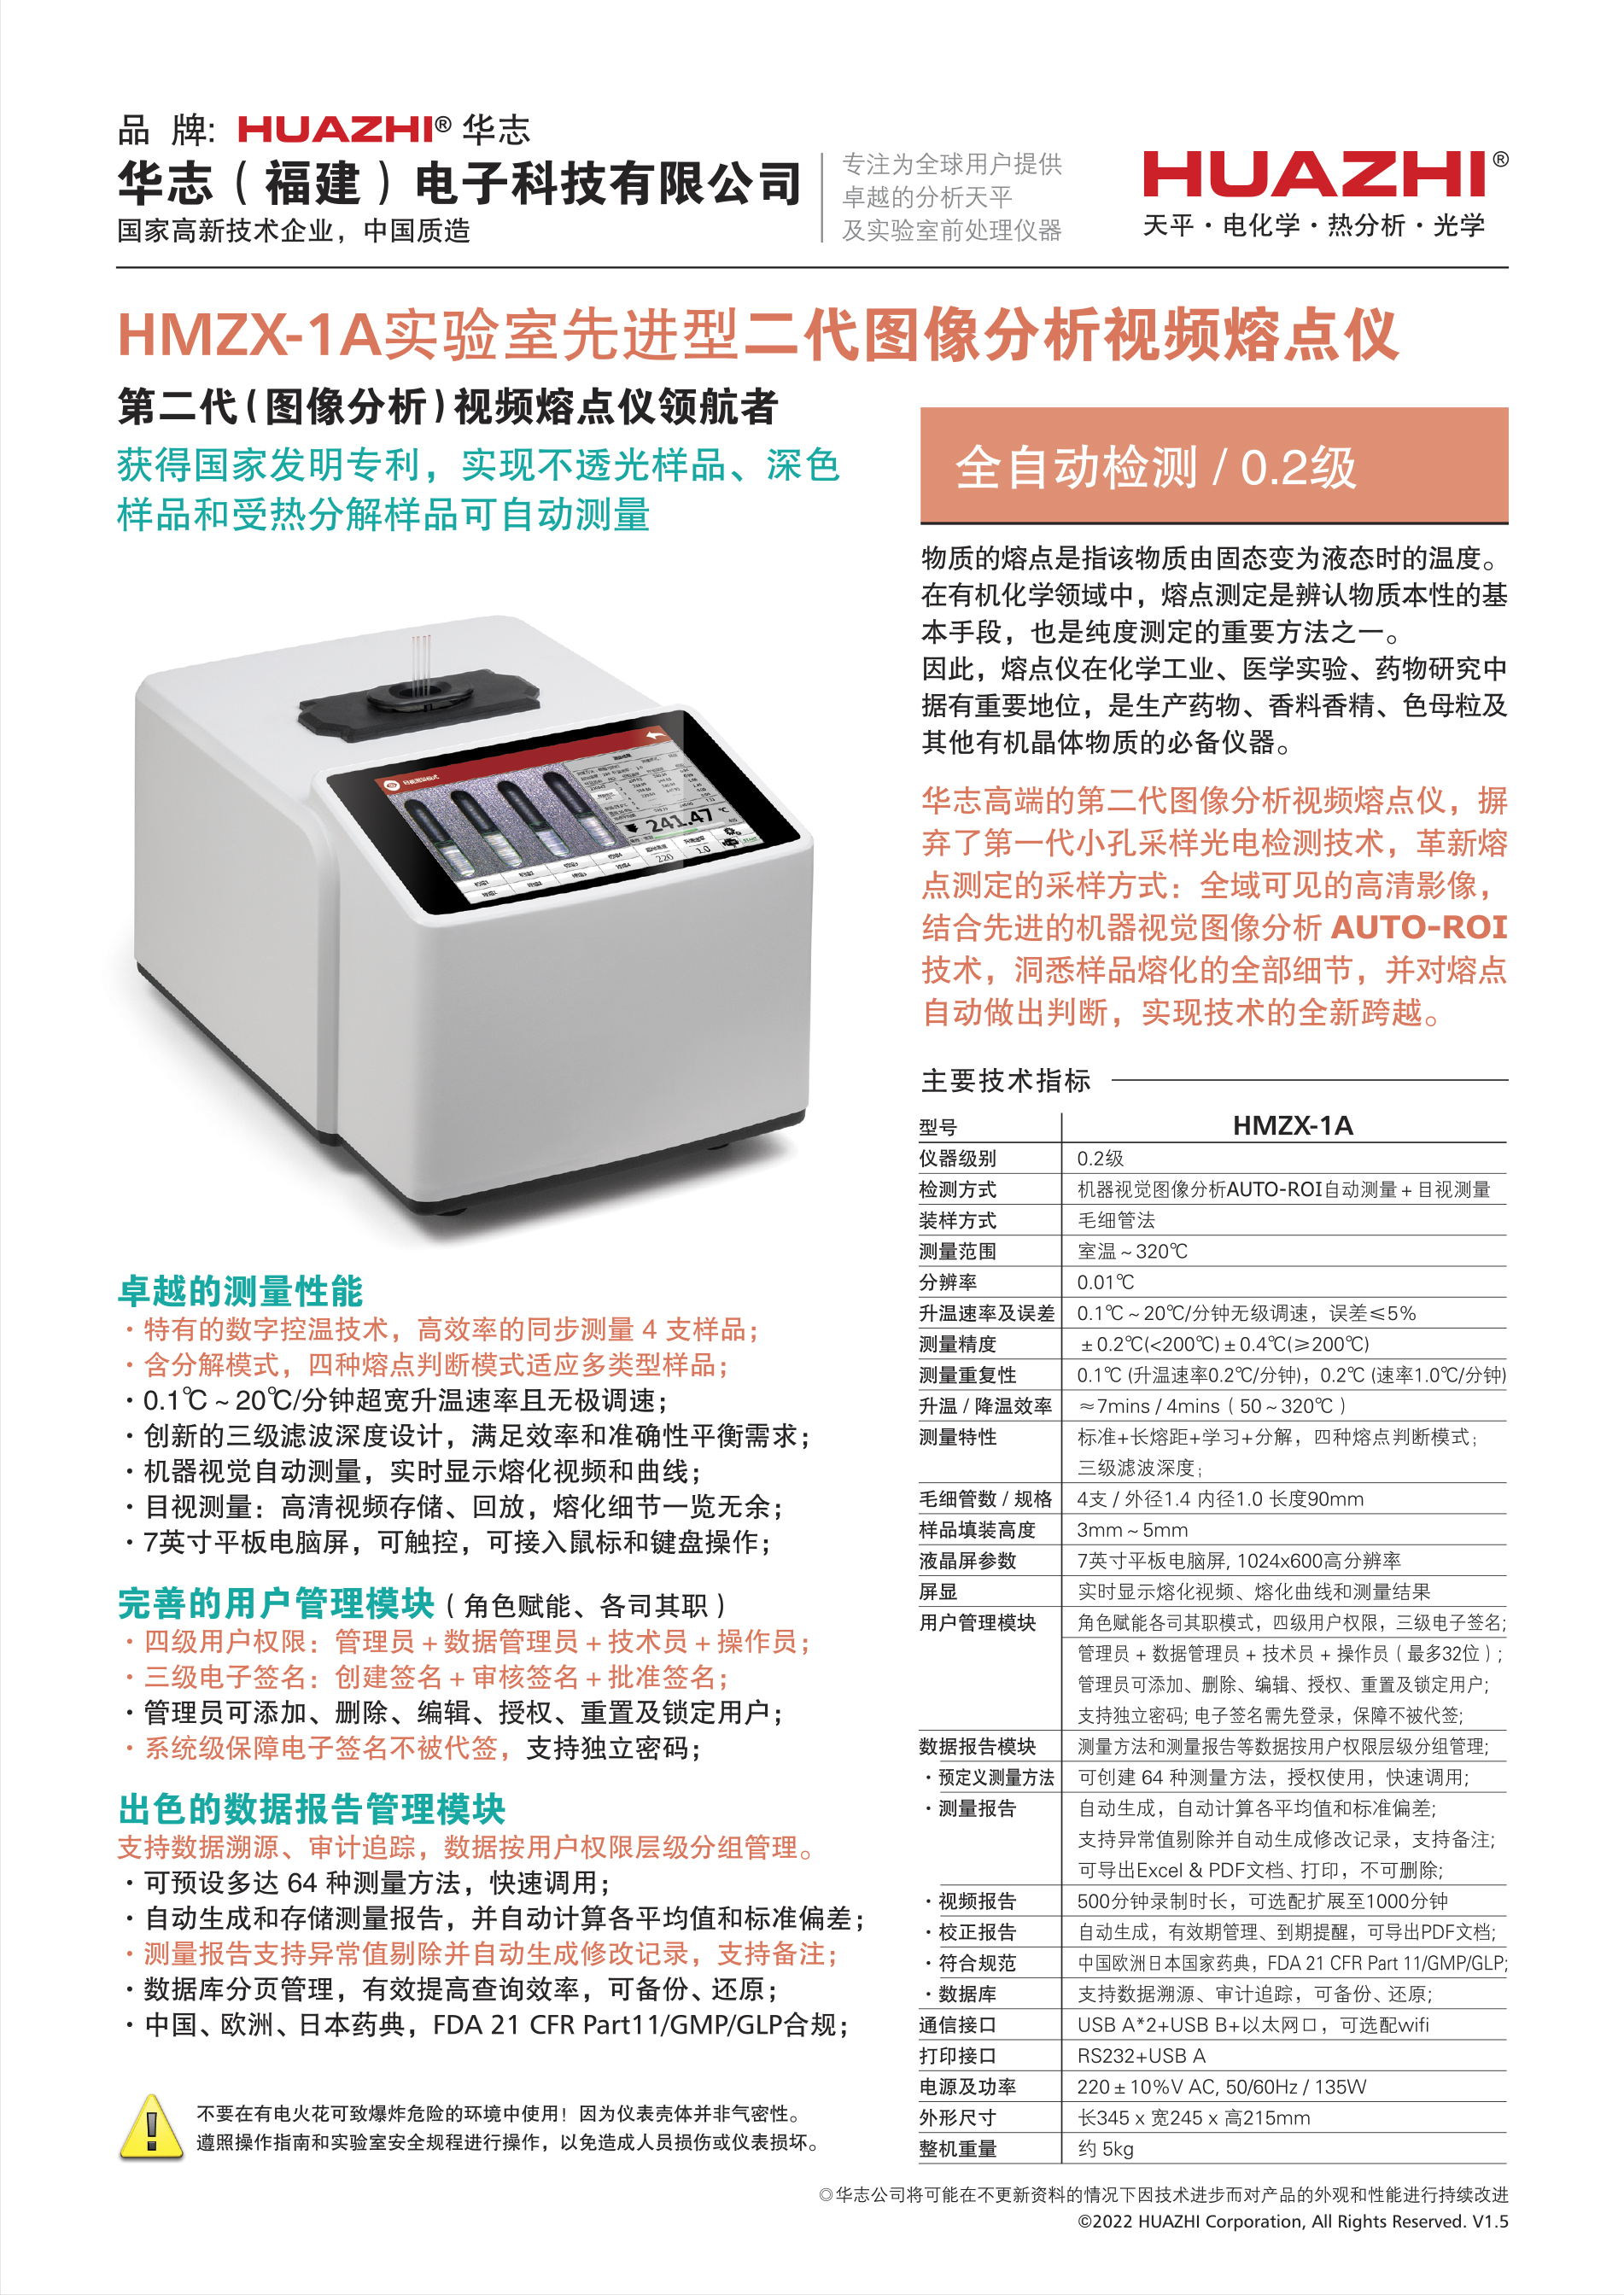 HMZX-1A二代视频熔点仪单机详情(中文v1.5).jpg